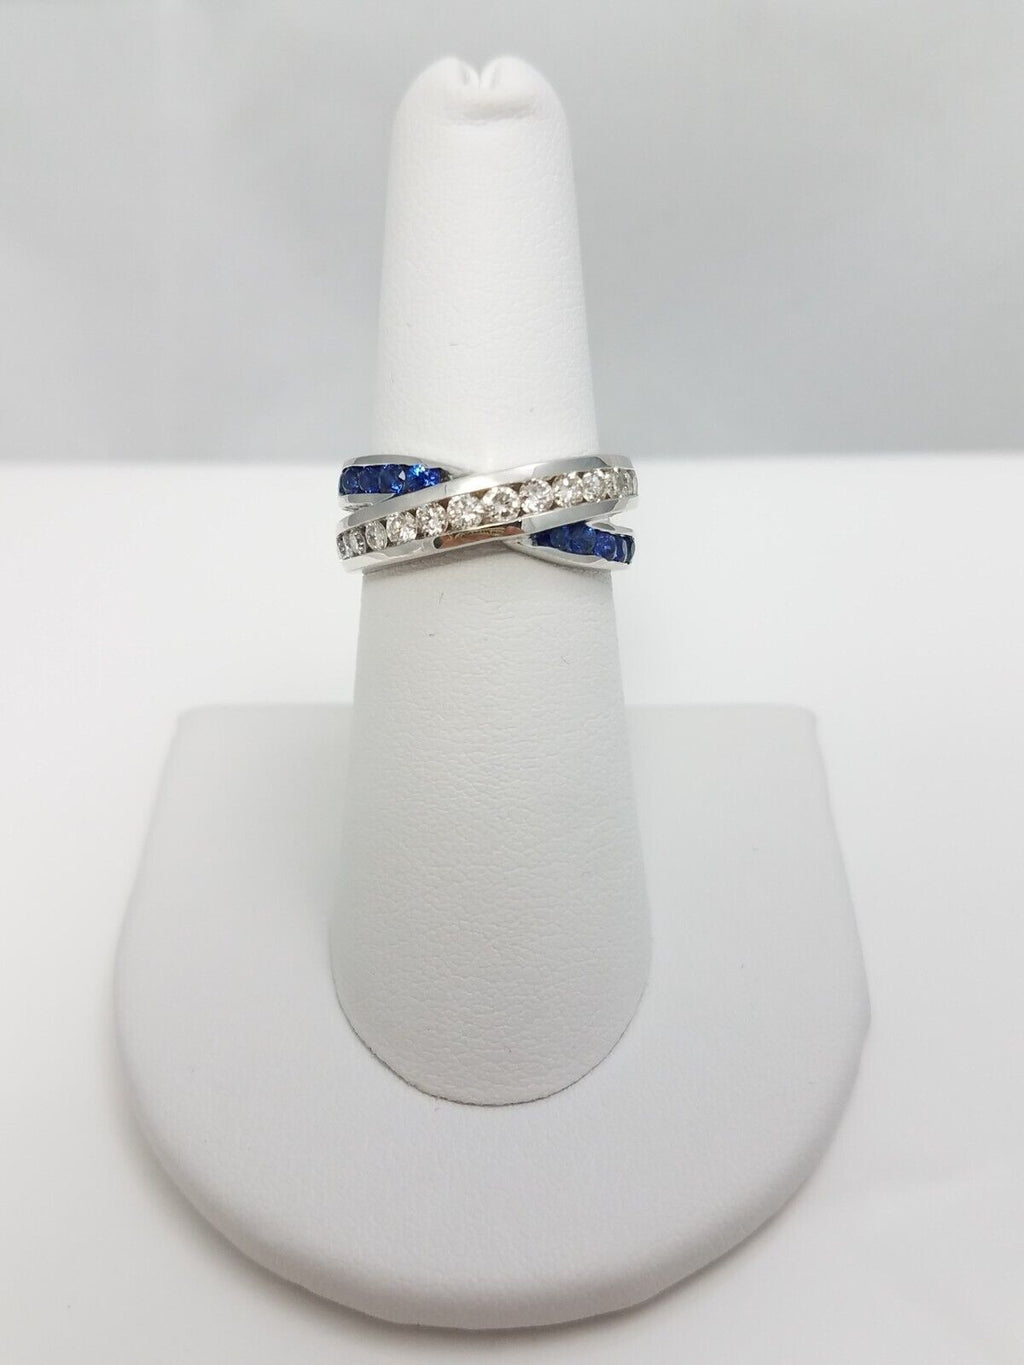 New! 14k White Gold Sapphire Diamond Ring